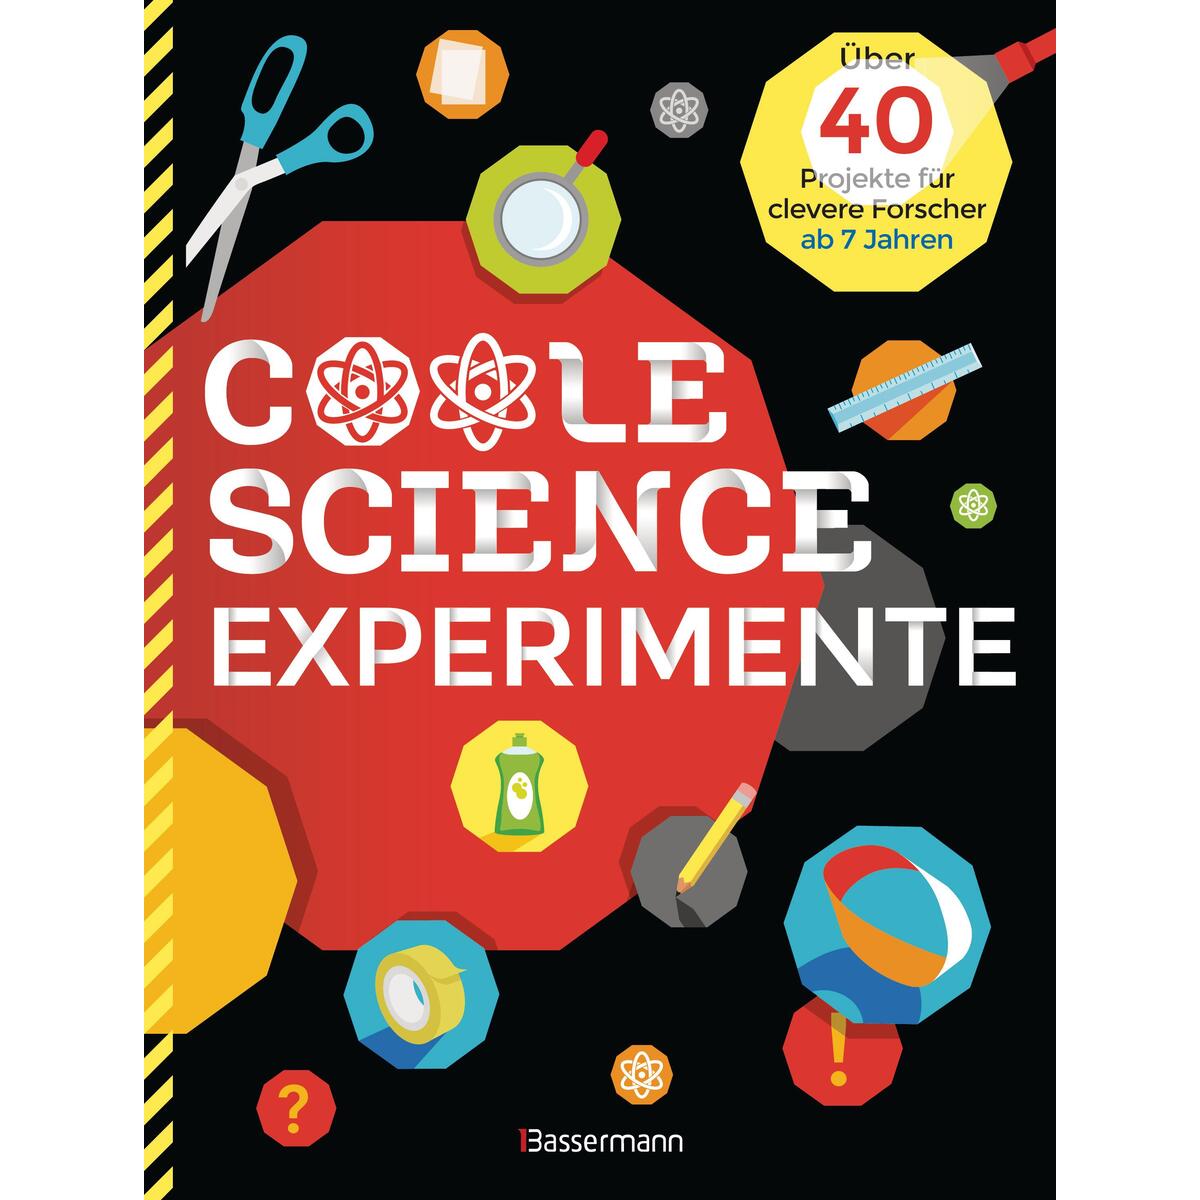 Coole Science-Experimente von Bassermann, Edition